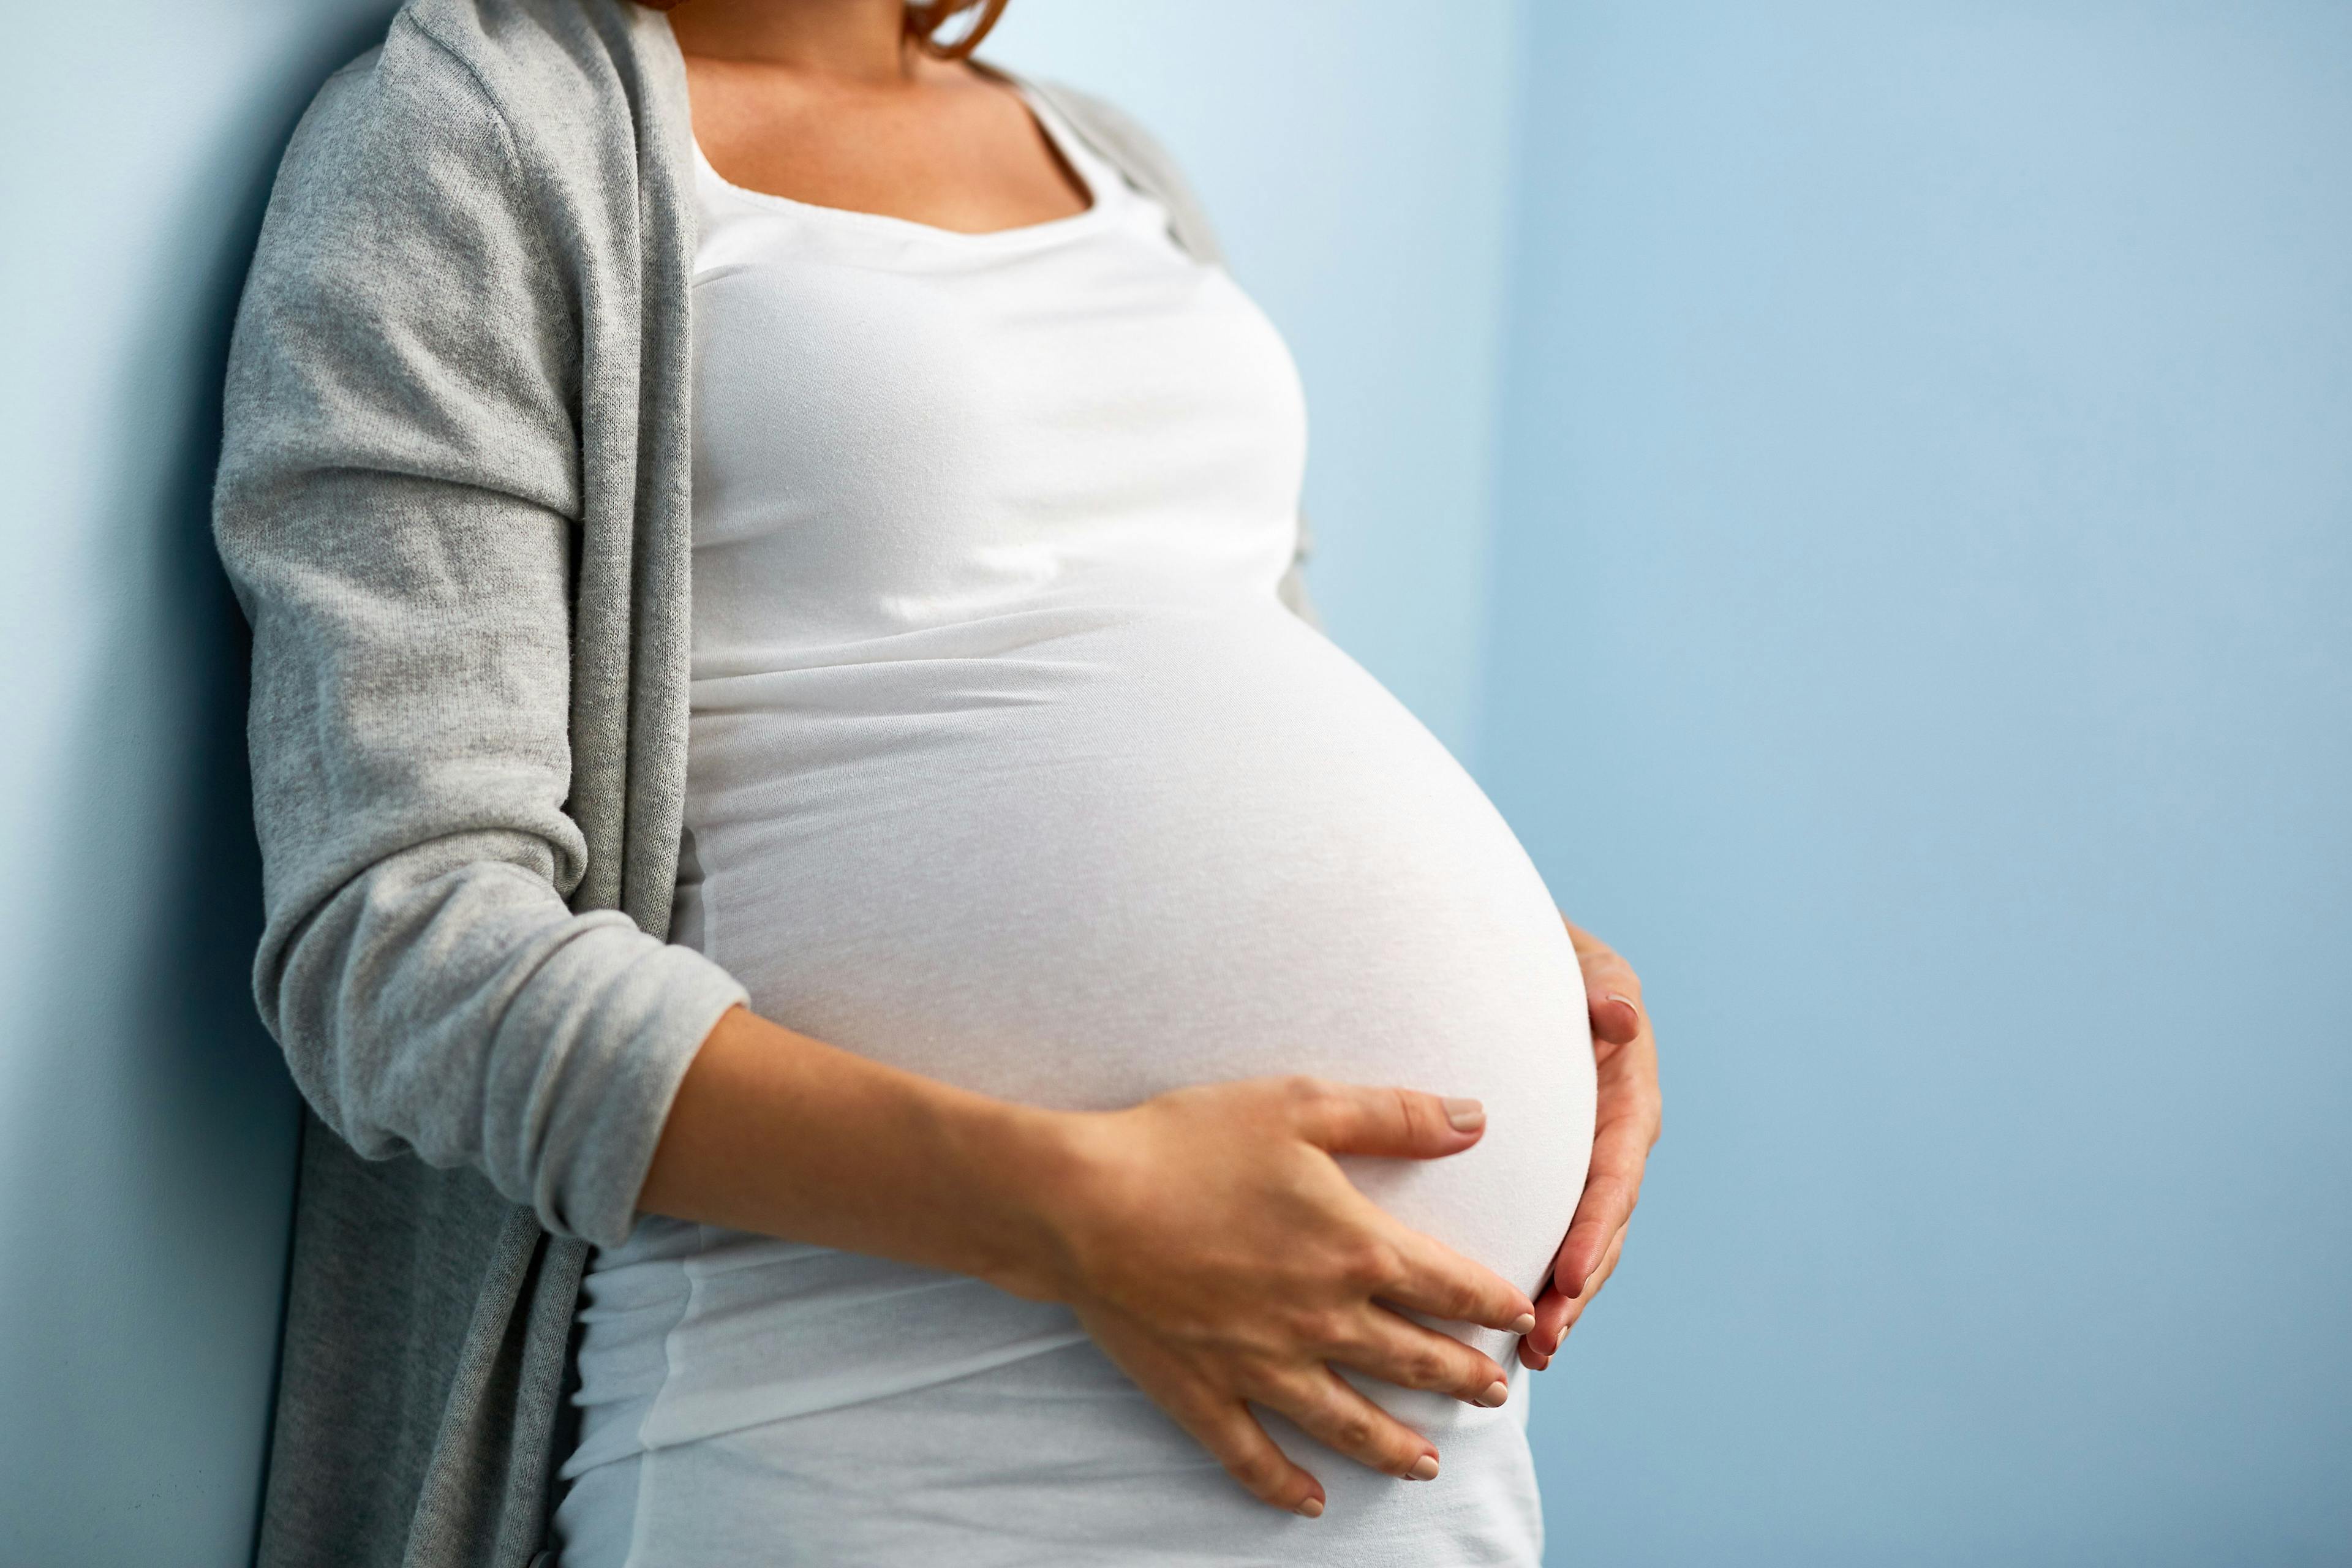 Maternal exposure to antiepilieptics may cause fetal intellectual disabilities